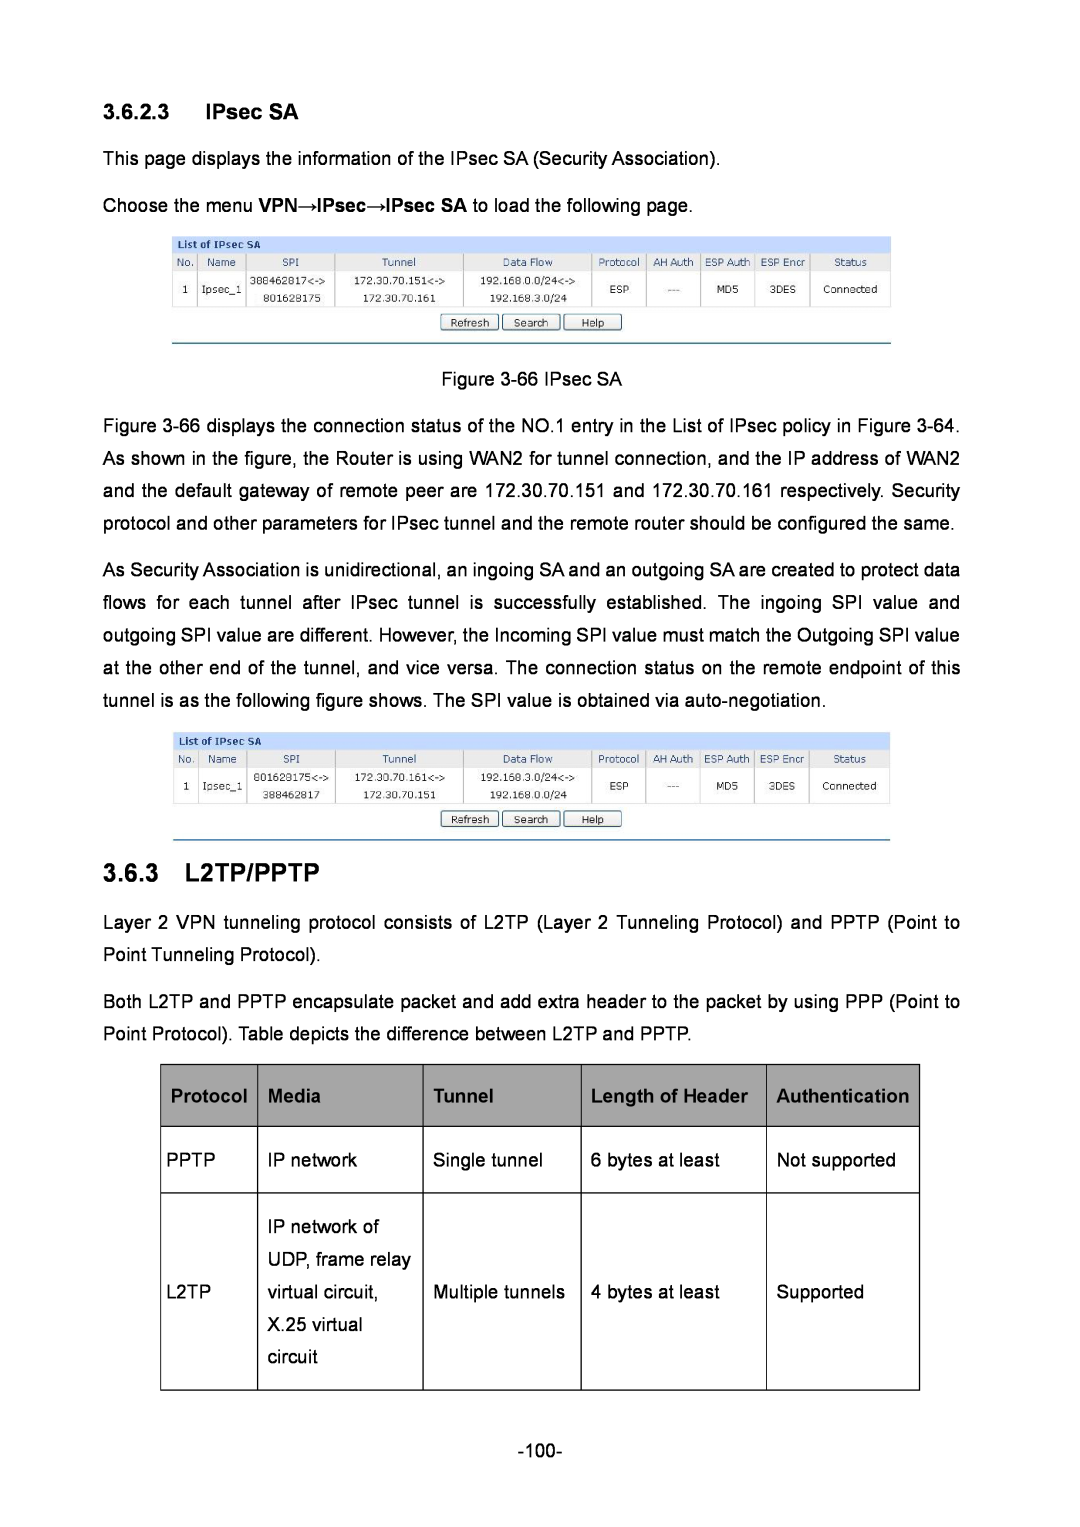 TP-Link TL-ER604W manual 3.6.3 L2TP/PPTP, IPsec SA, Protocol, Media, Tunnel, Length of Header, Authentication 